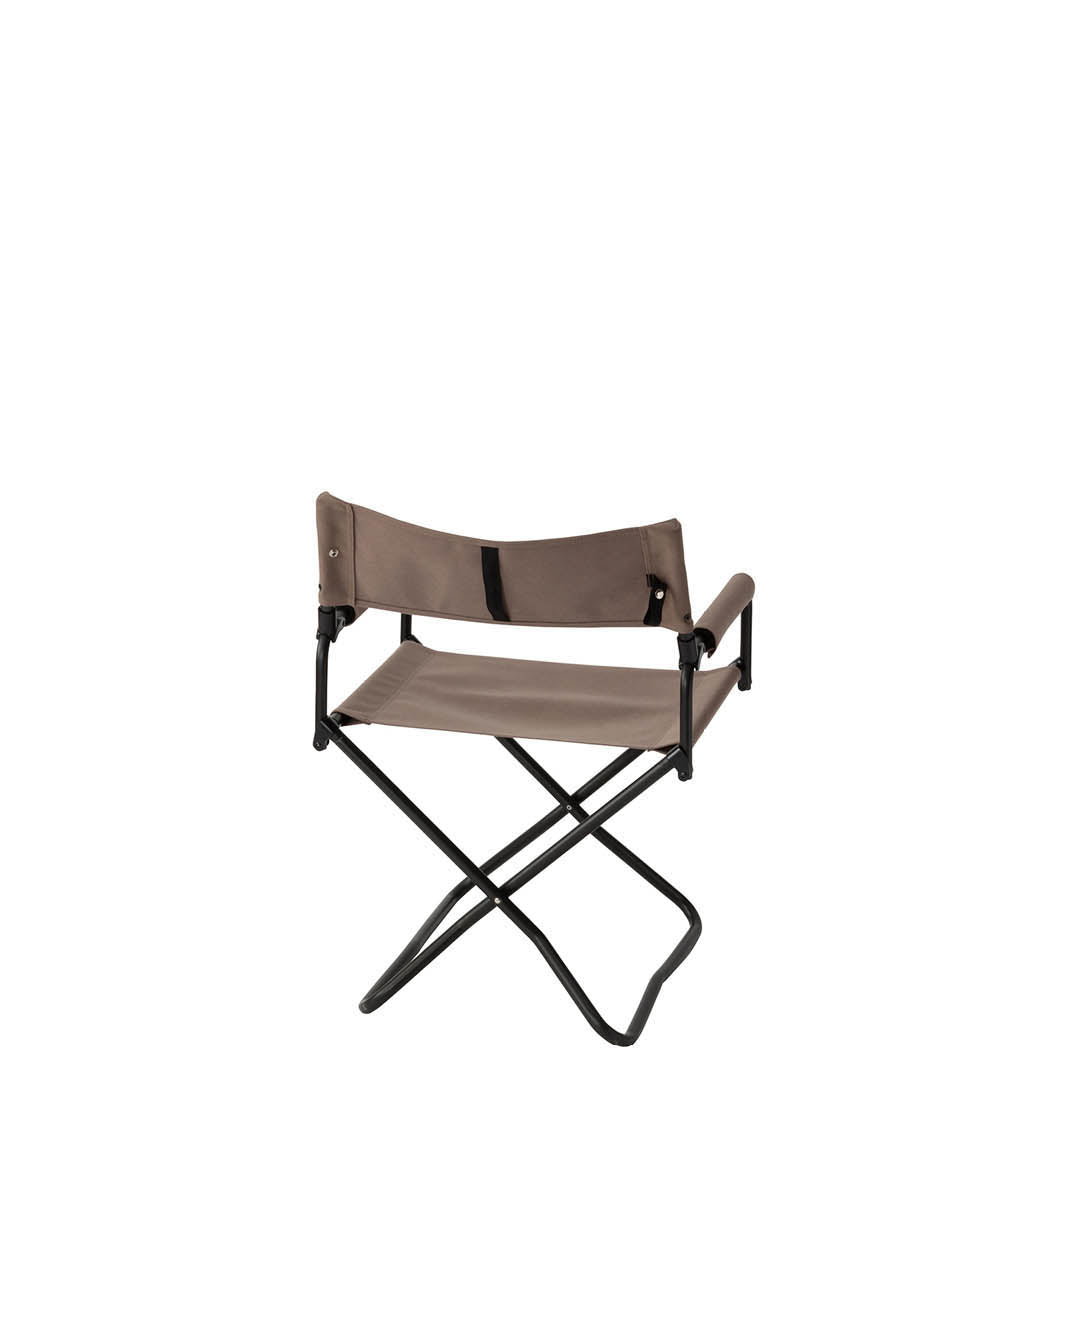 Gray Folding Chair